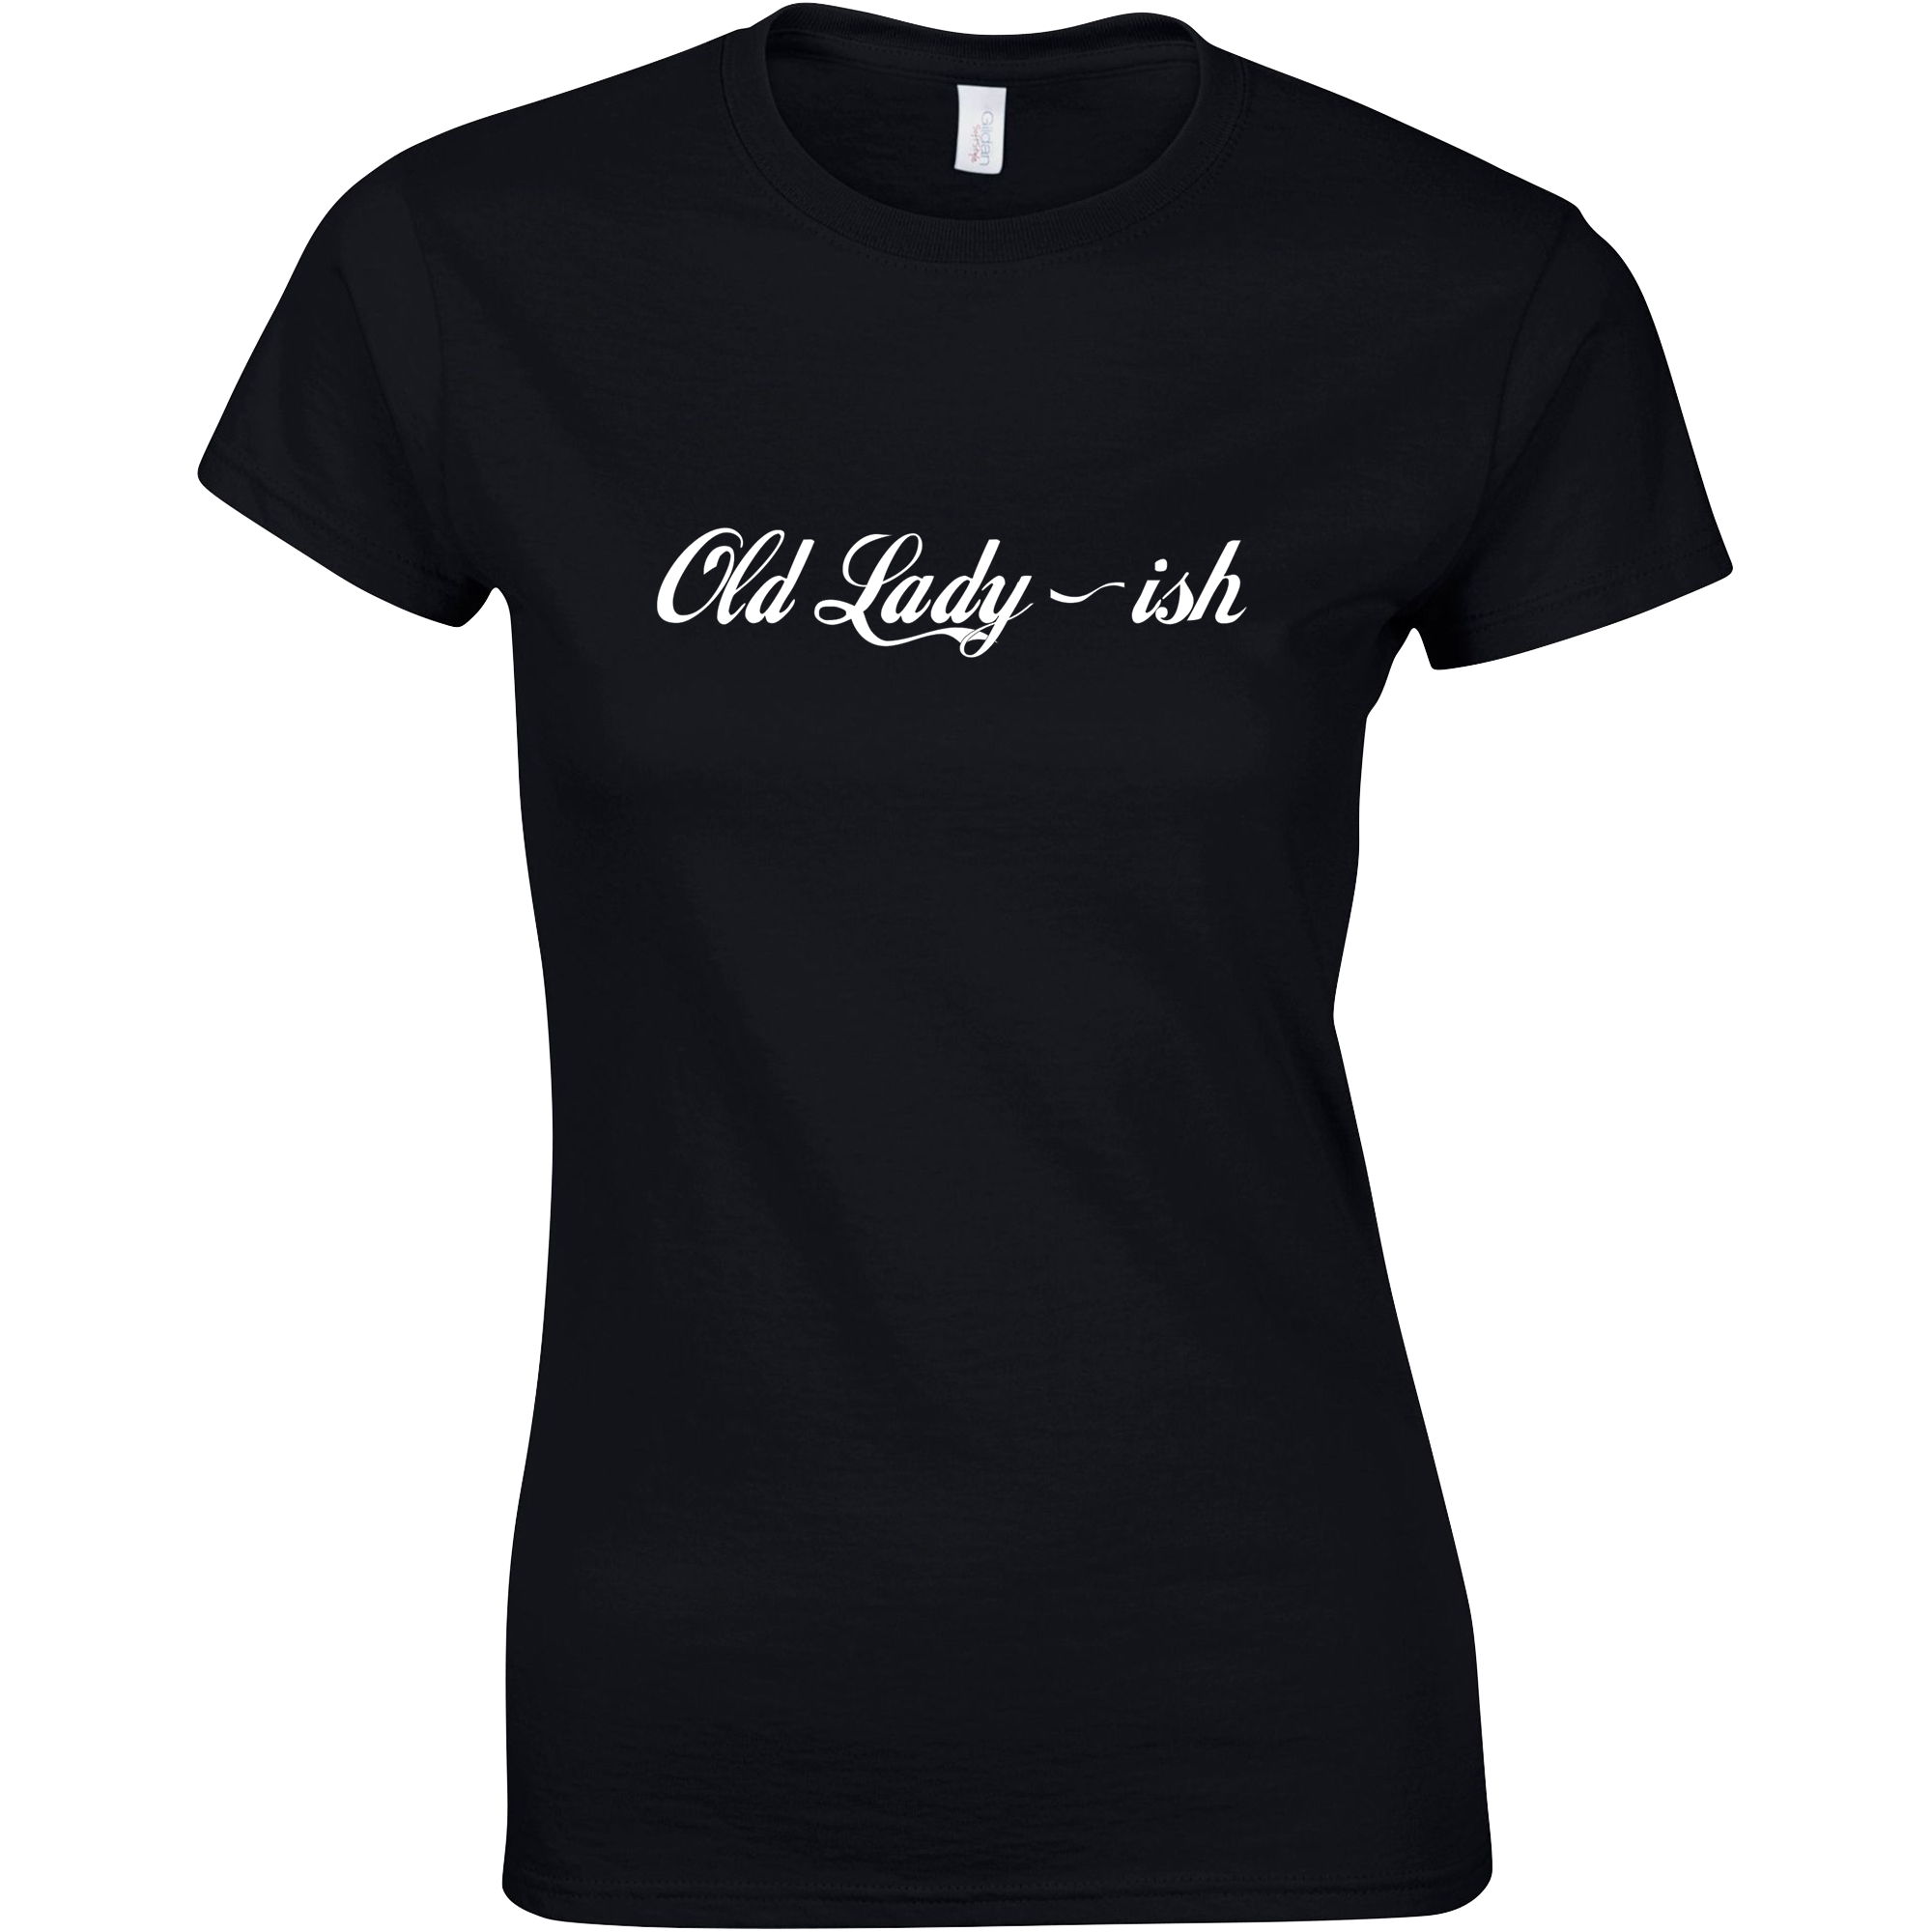 Old Lady-ish t-shirt